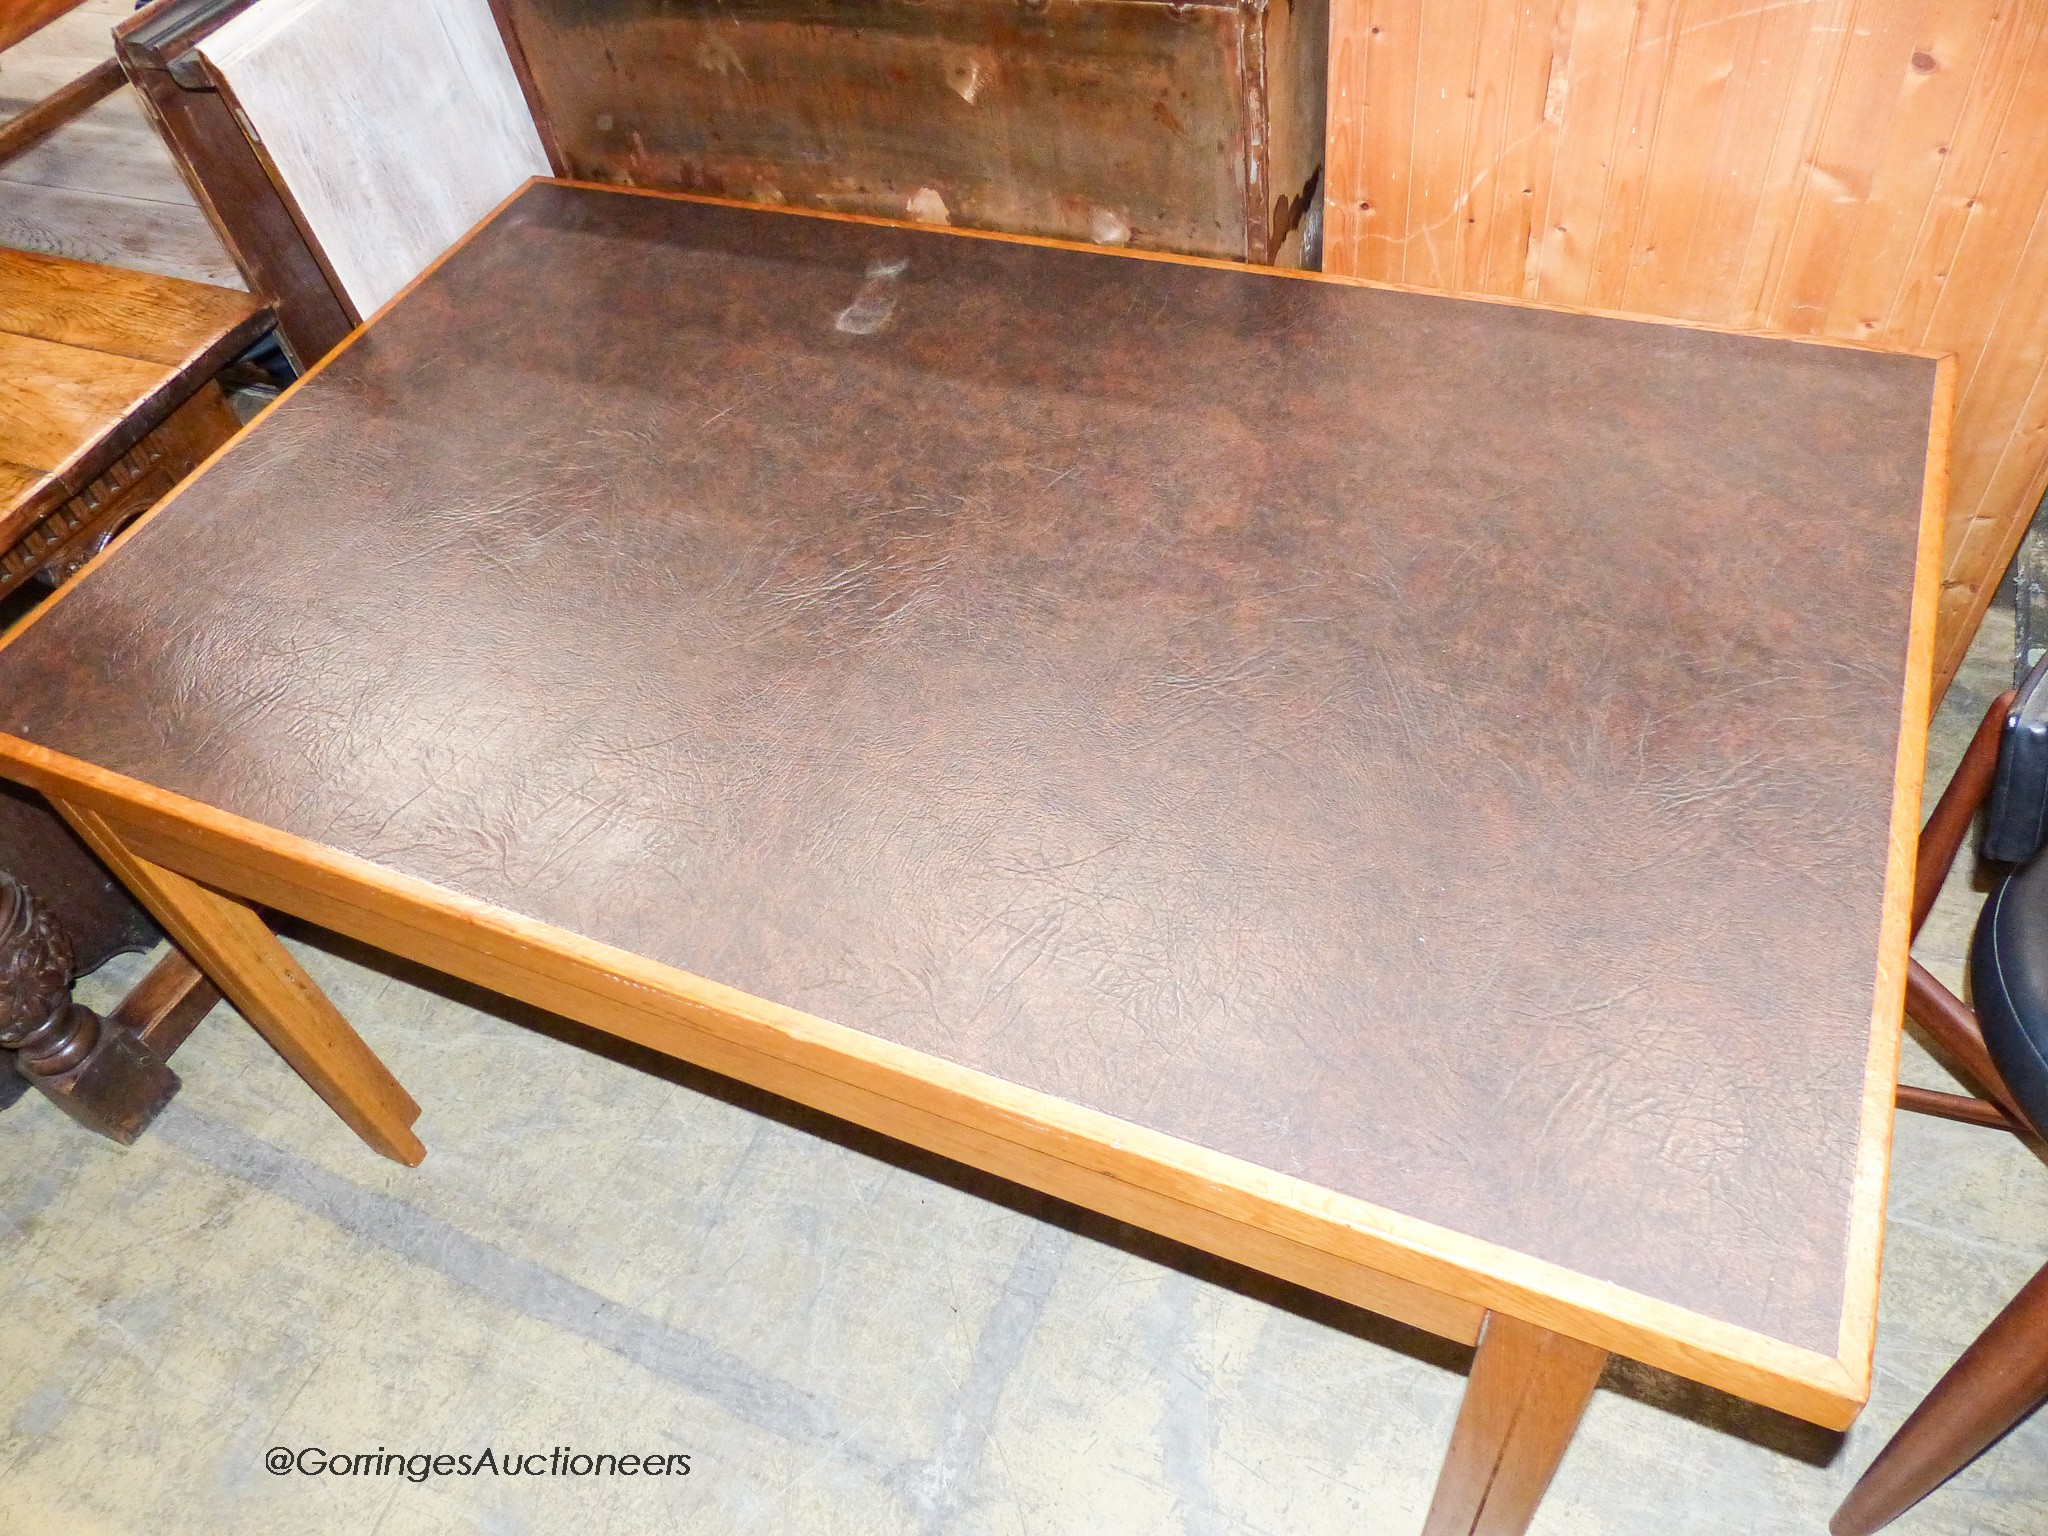 A mid century design Moss & Co rectangular oak writing table circa 1960, length 156cm, depth 95cm, height 75cm